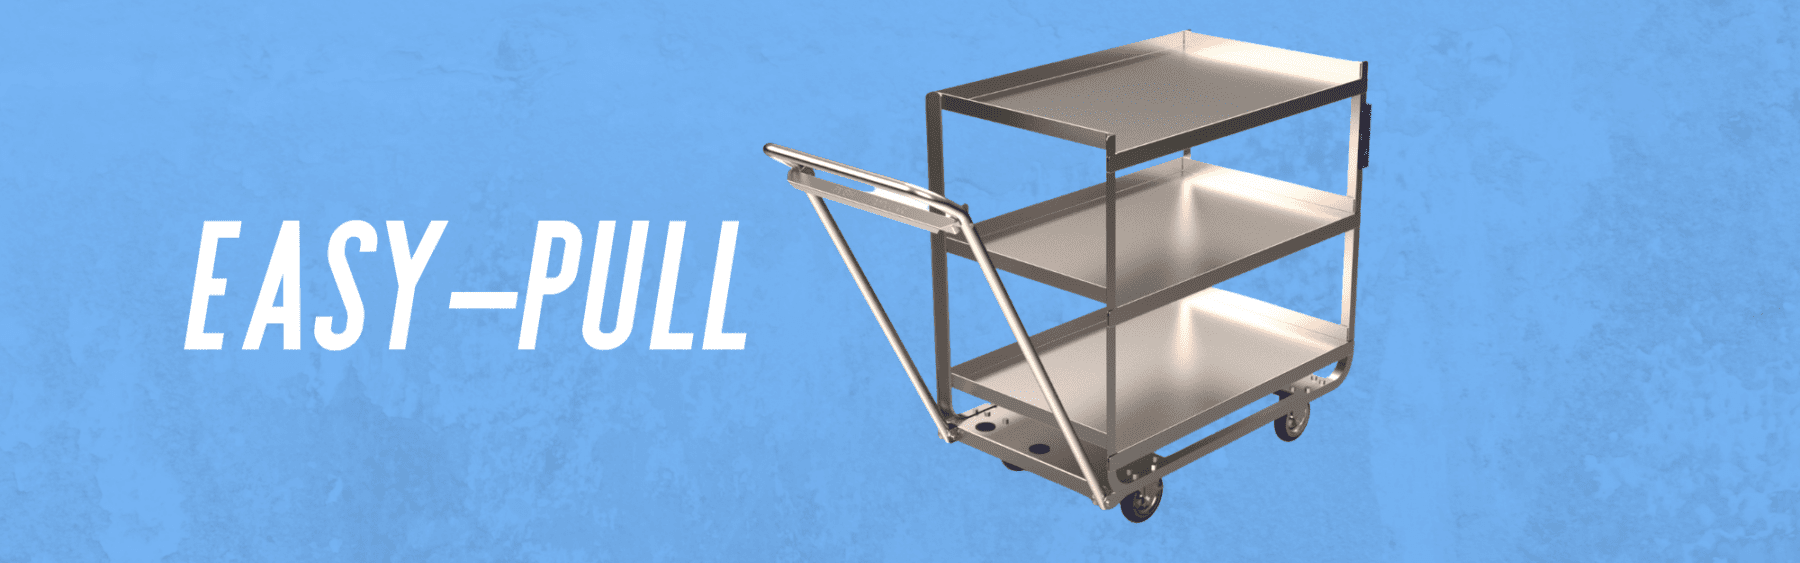 Easy-Pull utility cart